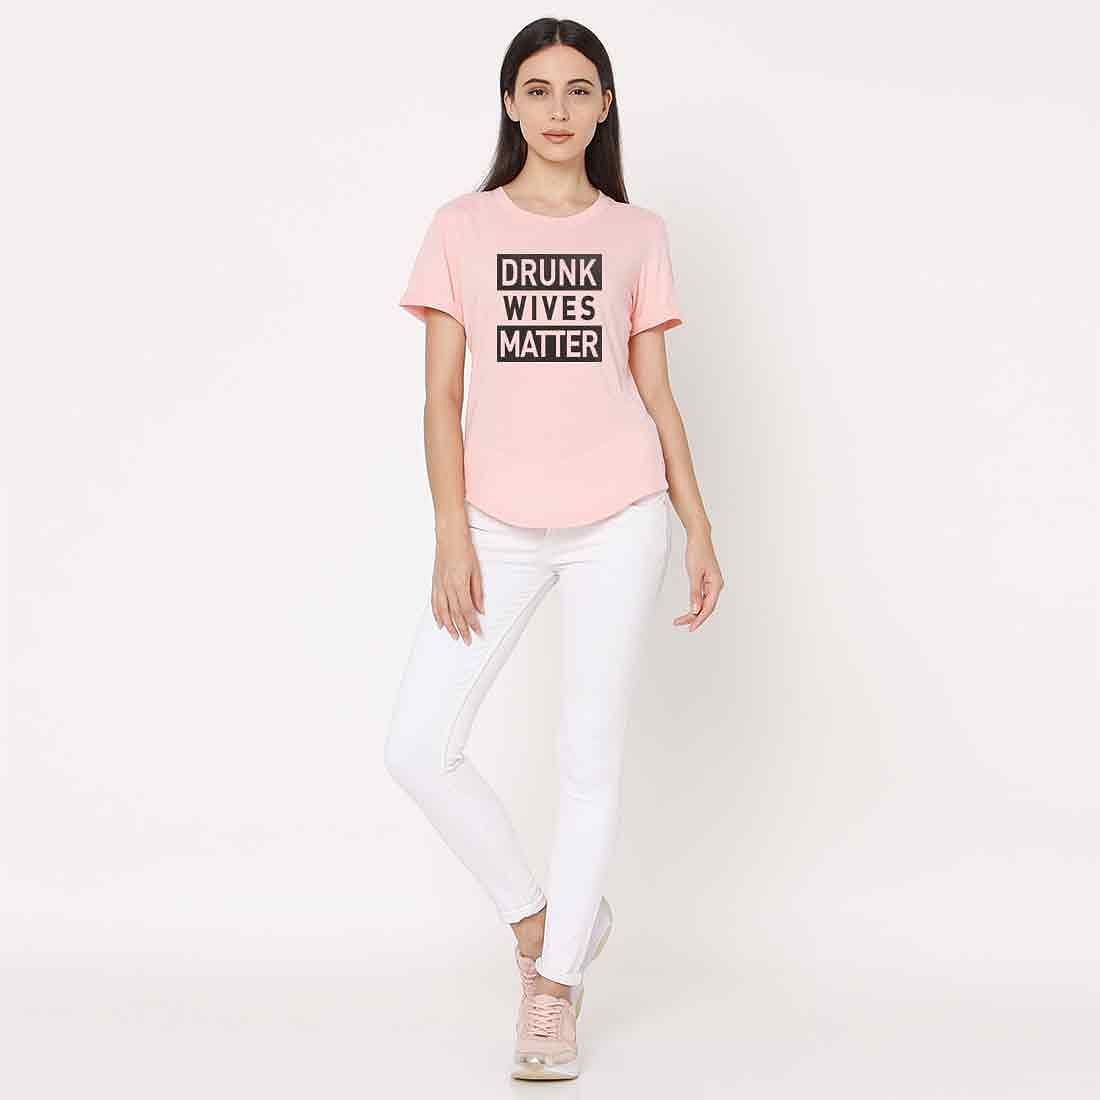 Funny T shirt For Women  - Drunk Wives Matter Nutcase